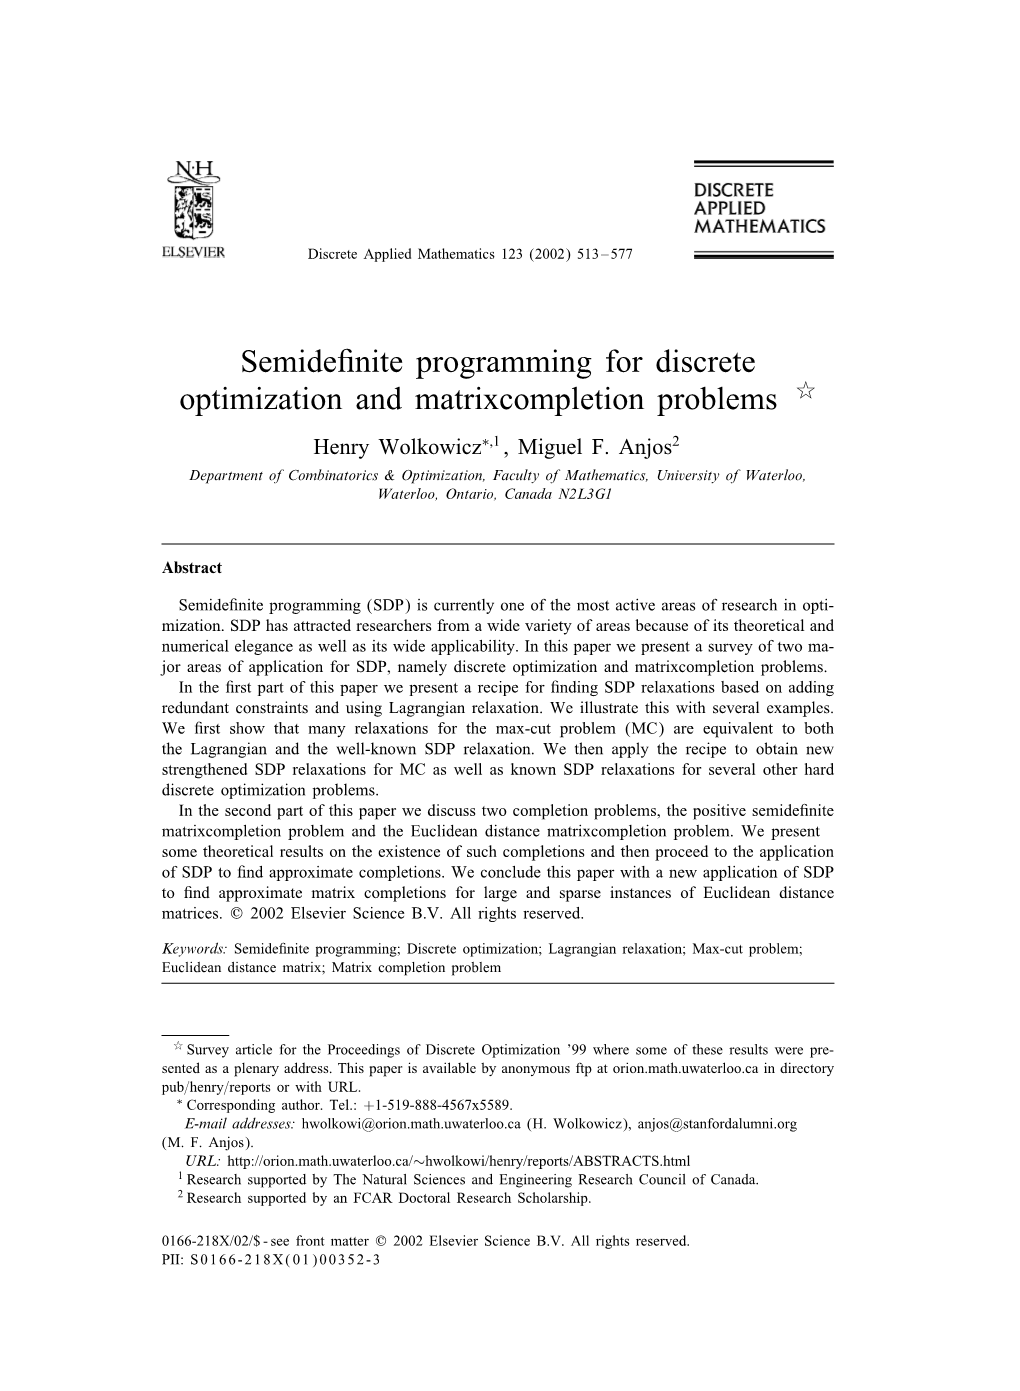 Semidefinite Programming for Discrete Optimization and Matrix Completion